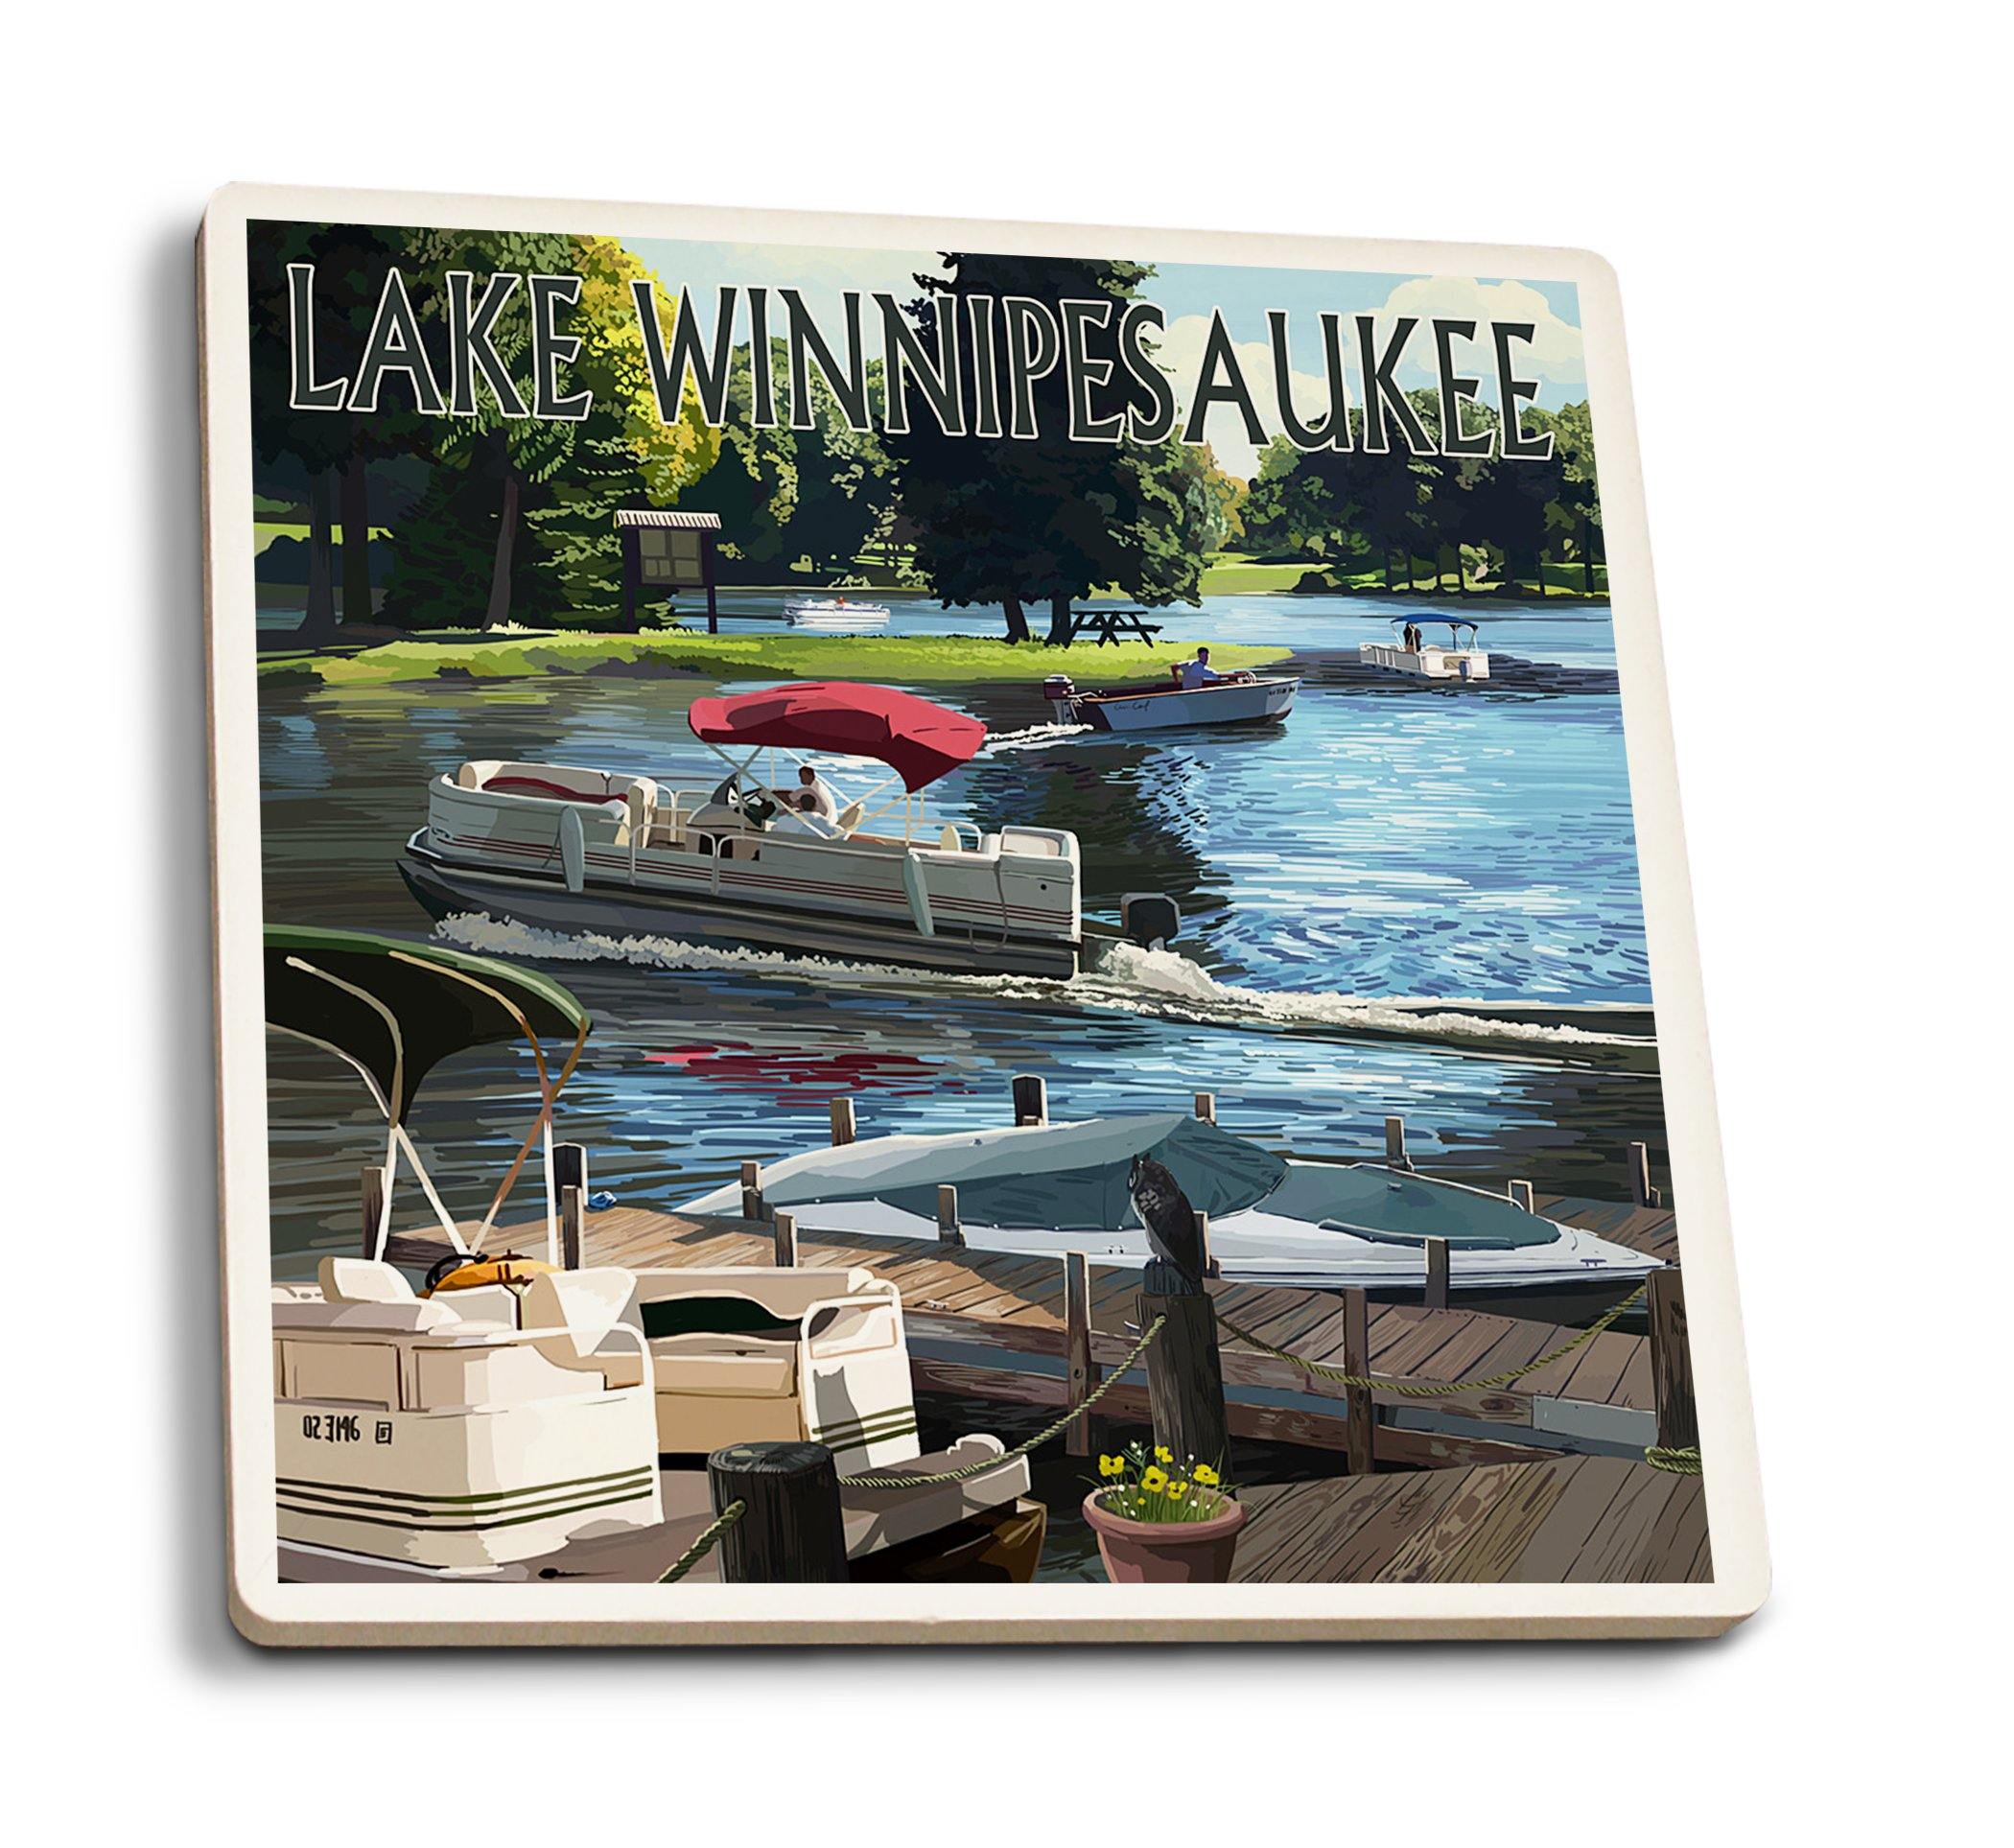 Lake Winnipesaukee, New Hampshire - Pontoon & Lake - Lantern Press Poster (Set of 4 Ceramic Coasters - Cork-Backed, Absorbent), Multicolor